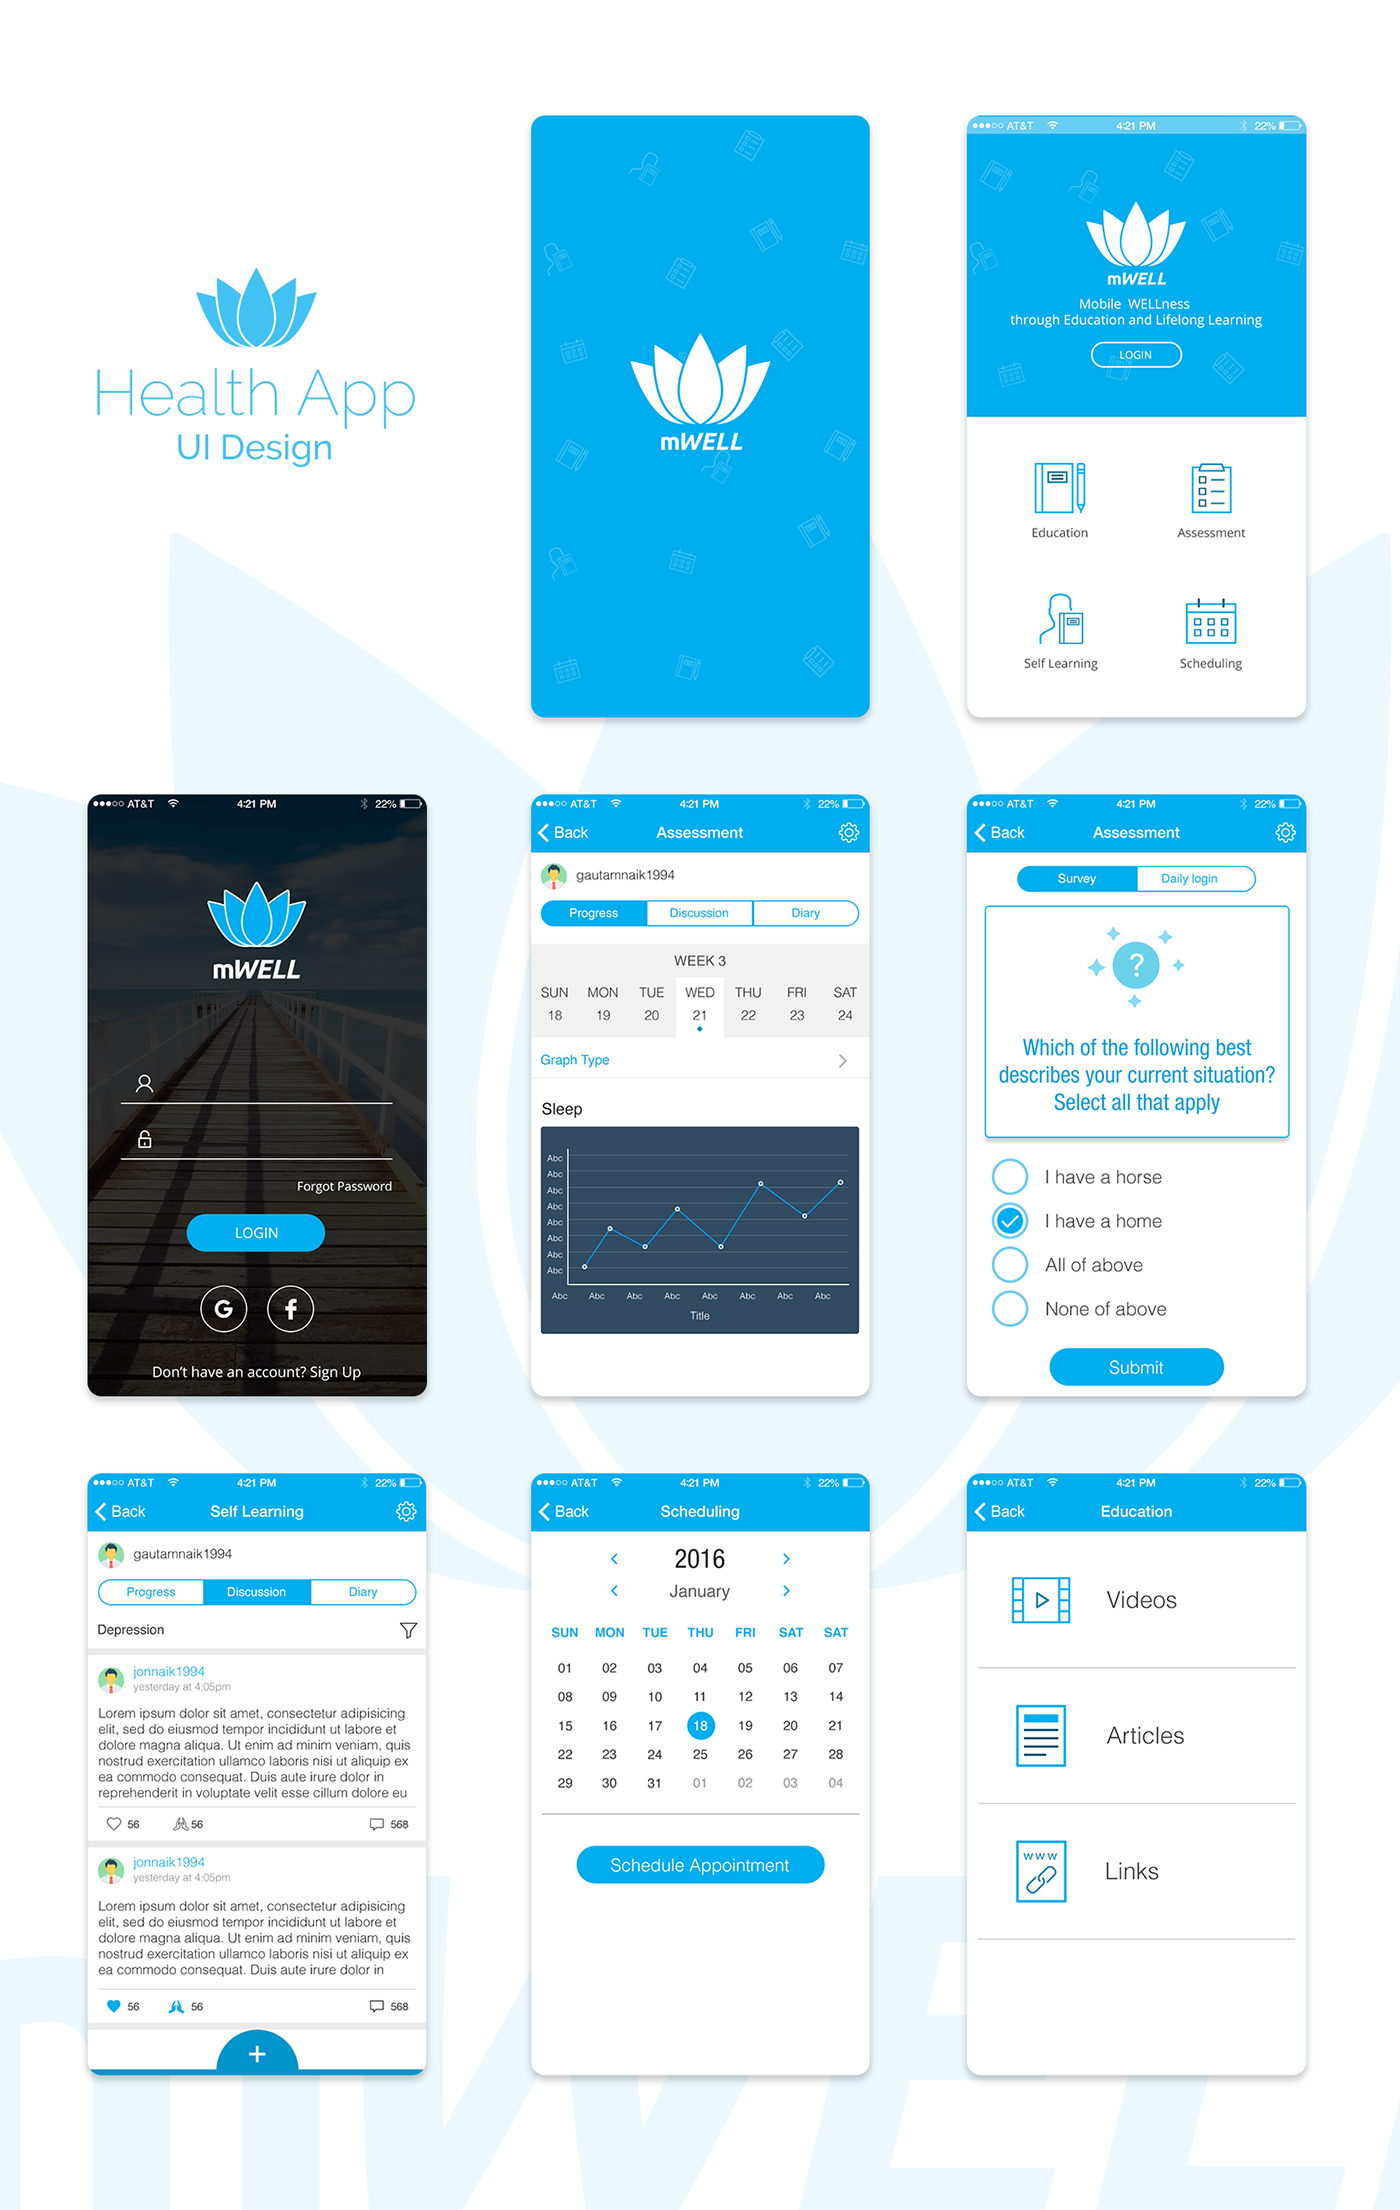 UI ui design design mobile mobile design Health app Health App medical Wellness